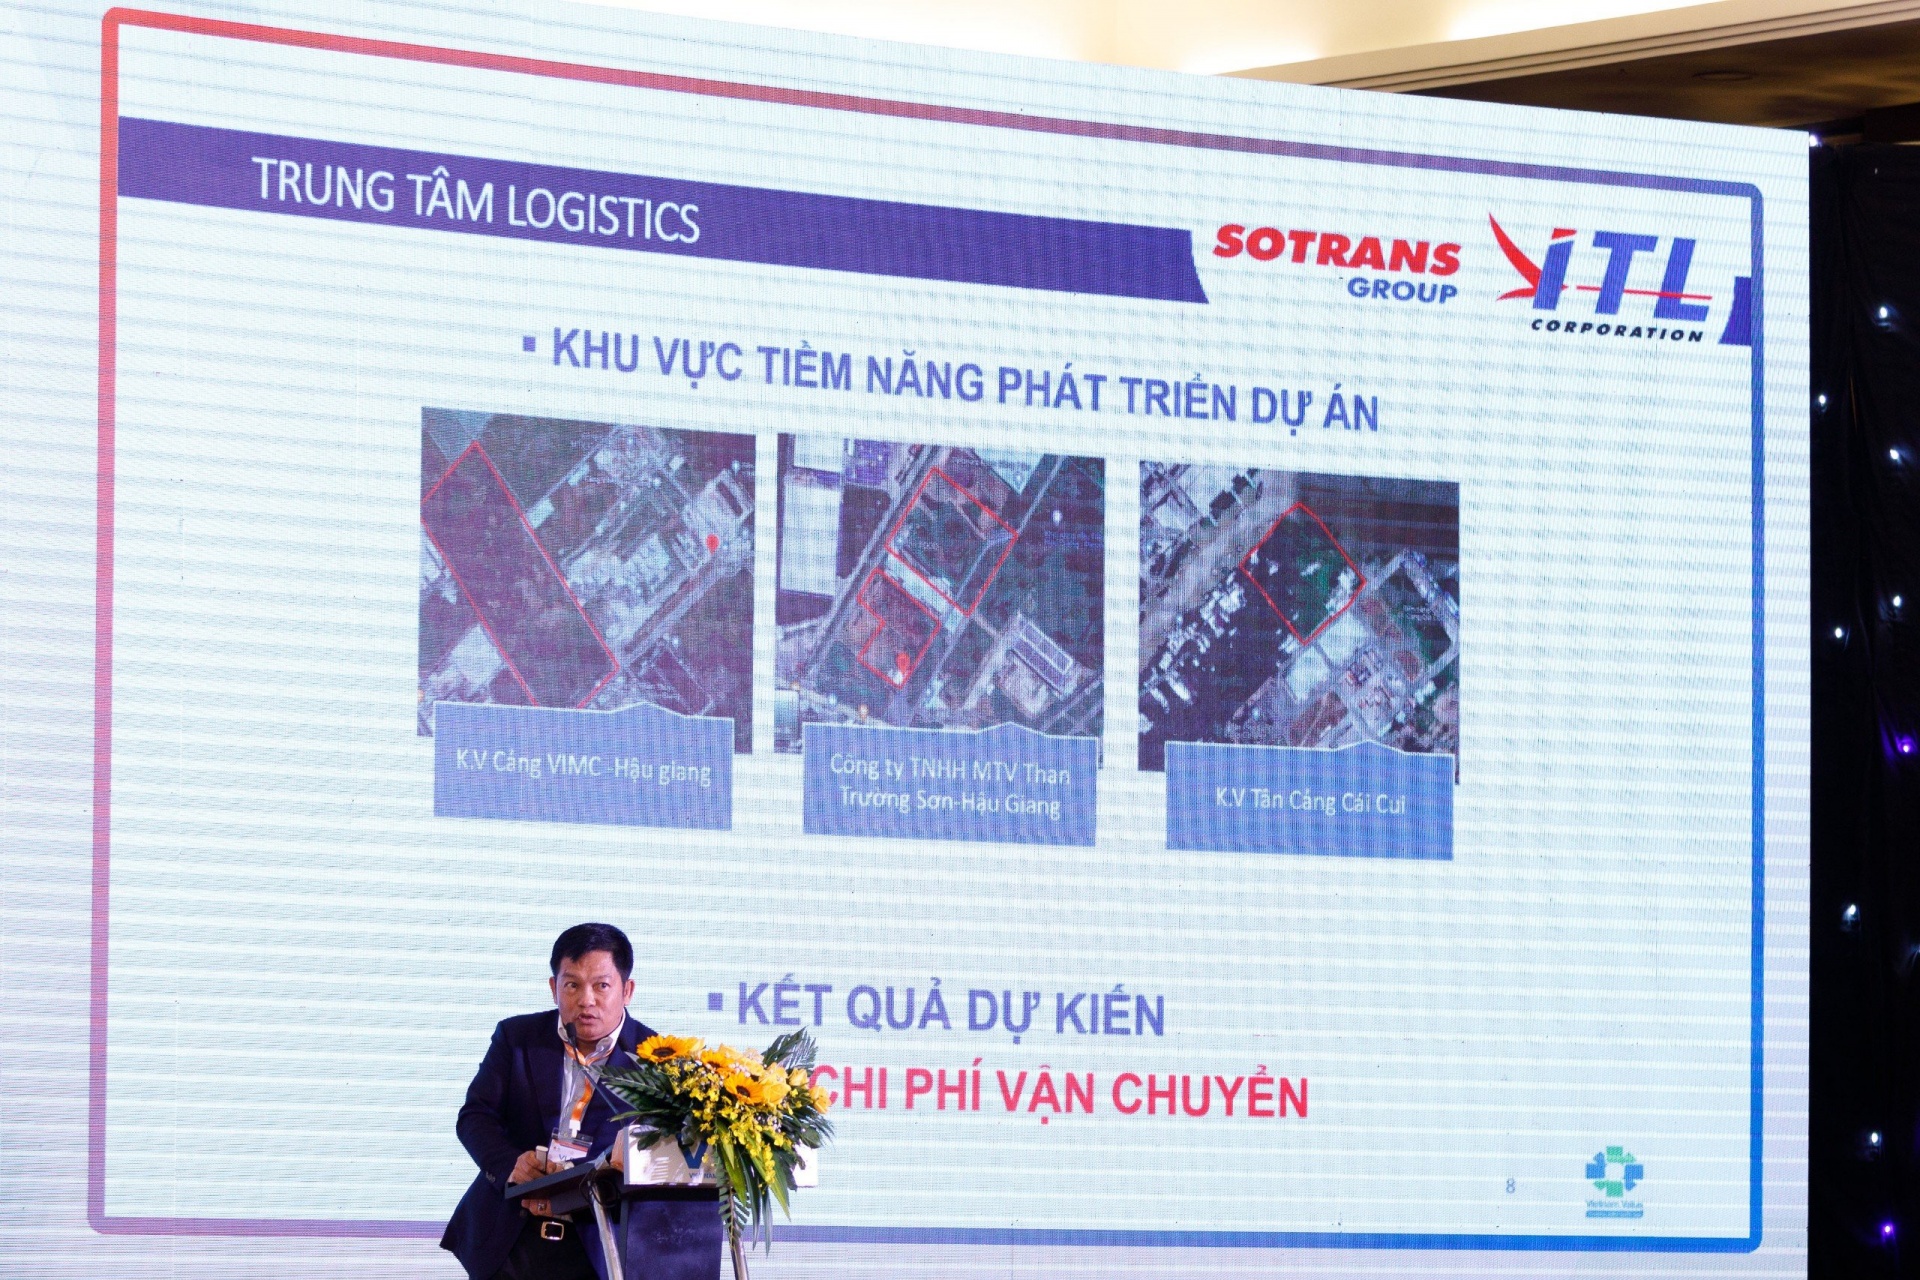 ITL enhances Vietnam’s logistics capabilities via sharing ecosystem  ​